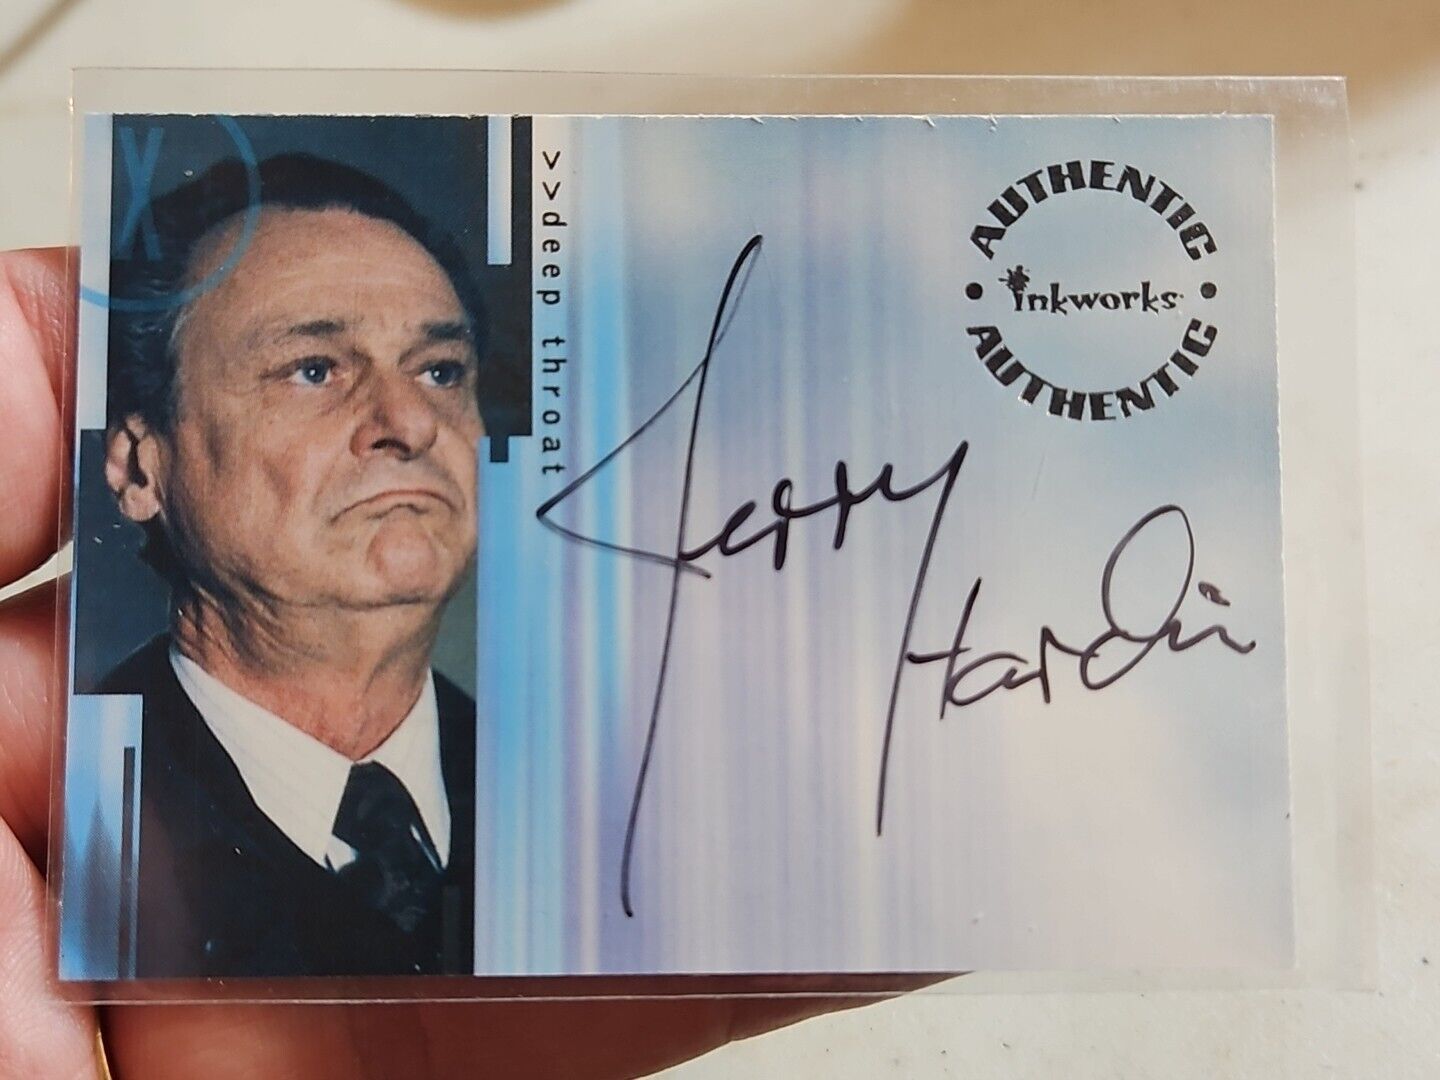 THE X-FILES SEASONS 4 &5 (Inkworks/2001) Autograph Card #A3 JERRY HARDIN